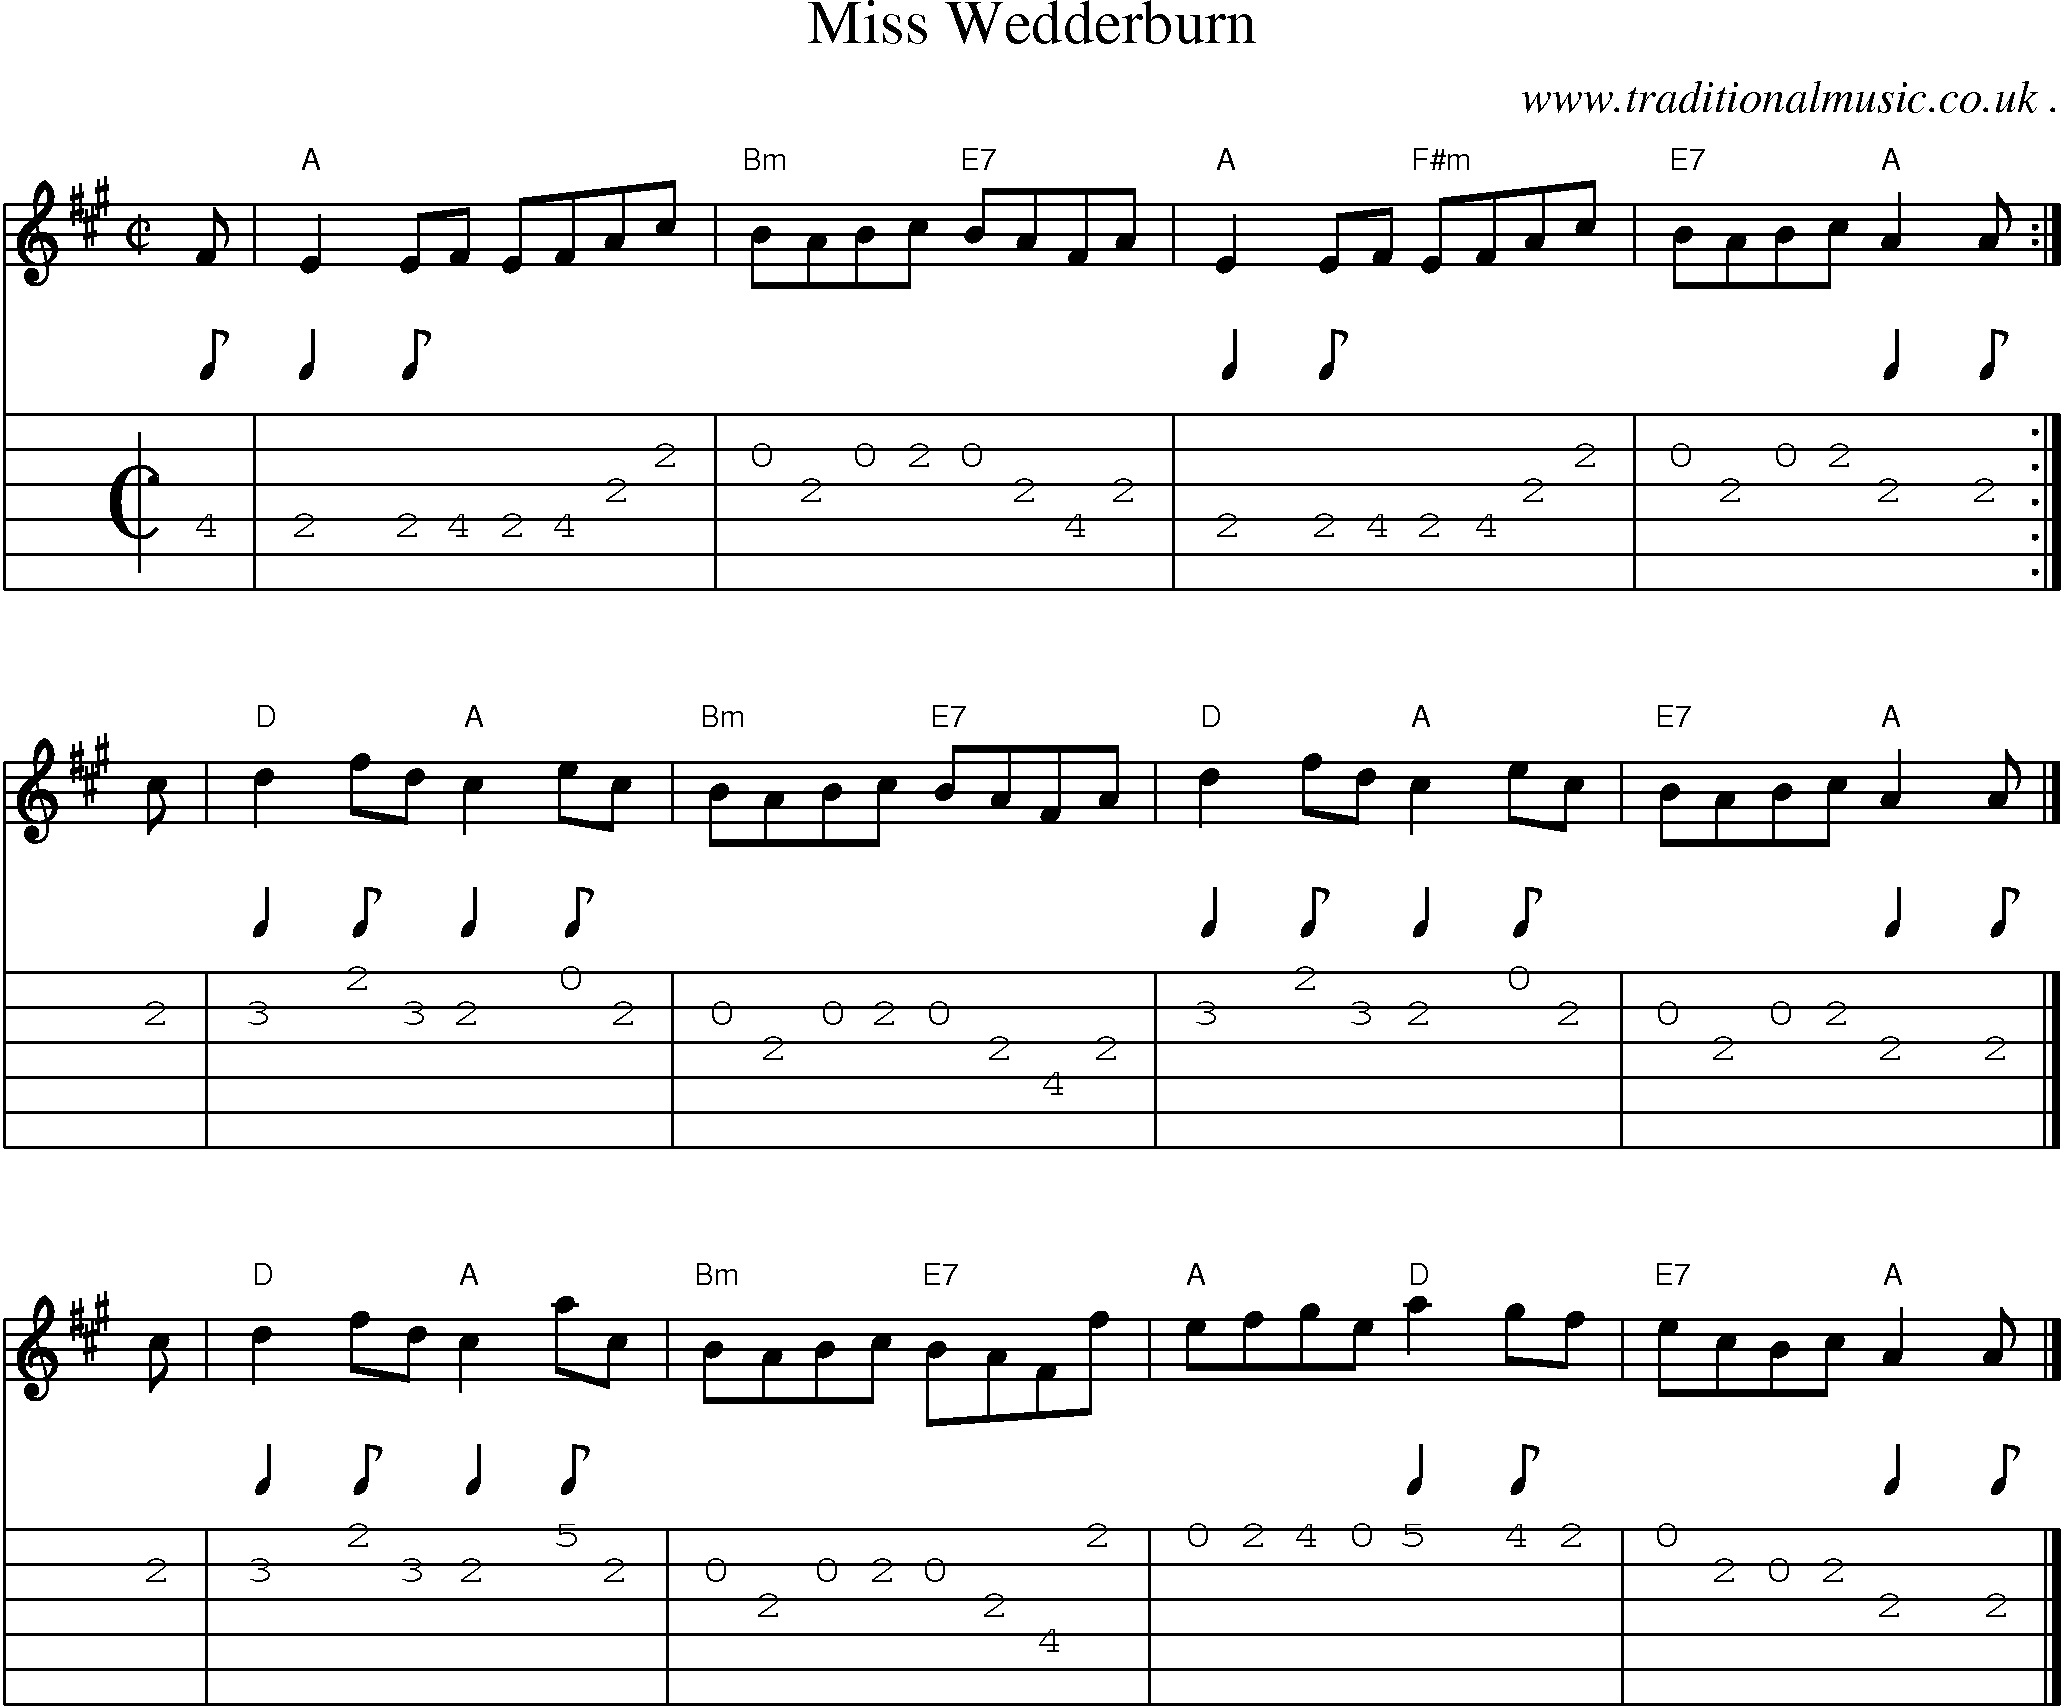 Sheet-music  score, Chords and Guitar Tabs for Miss Wedderburn